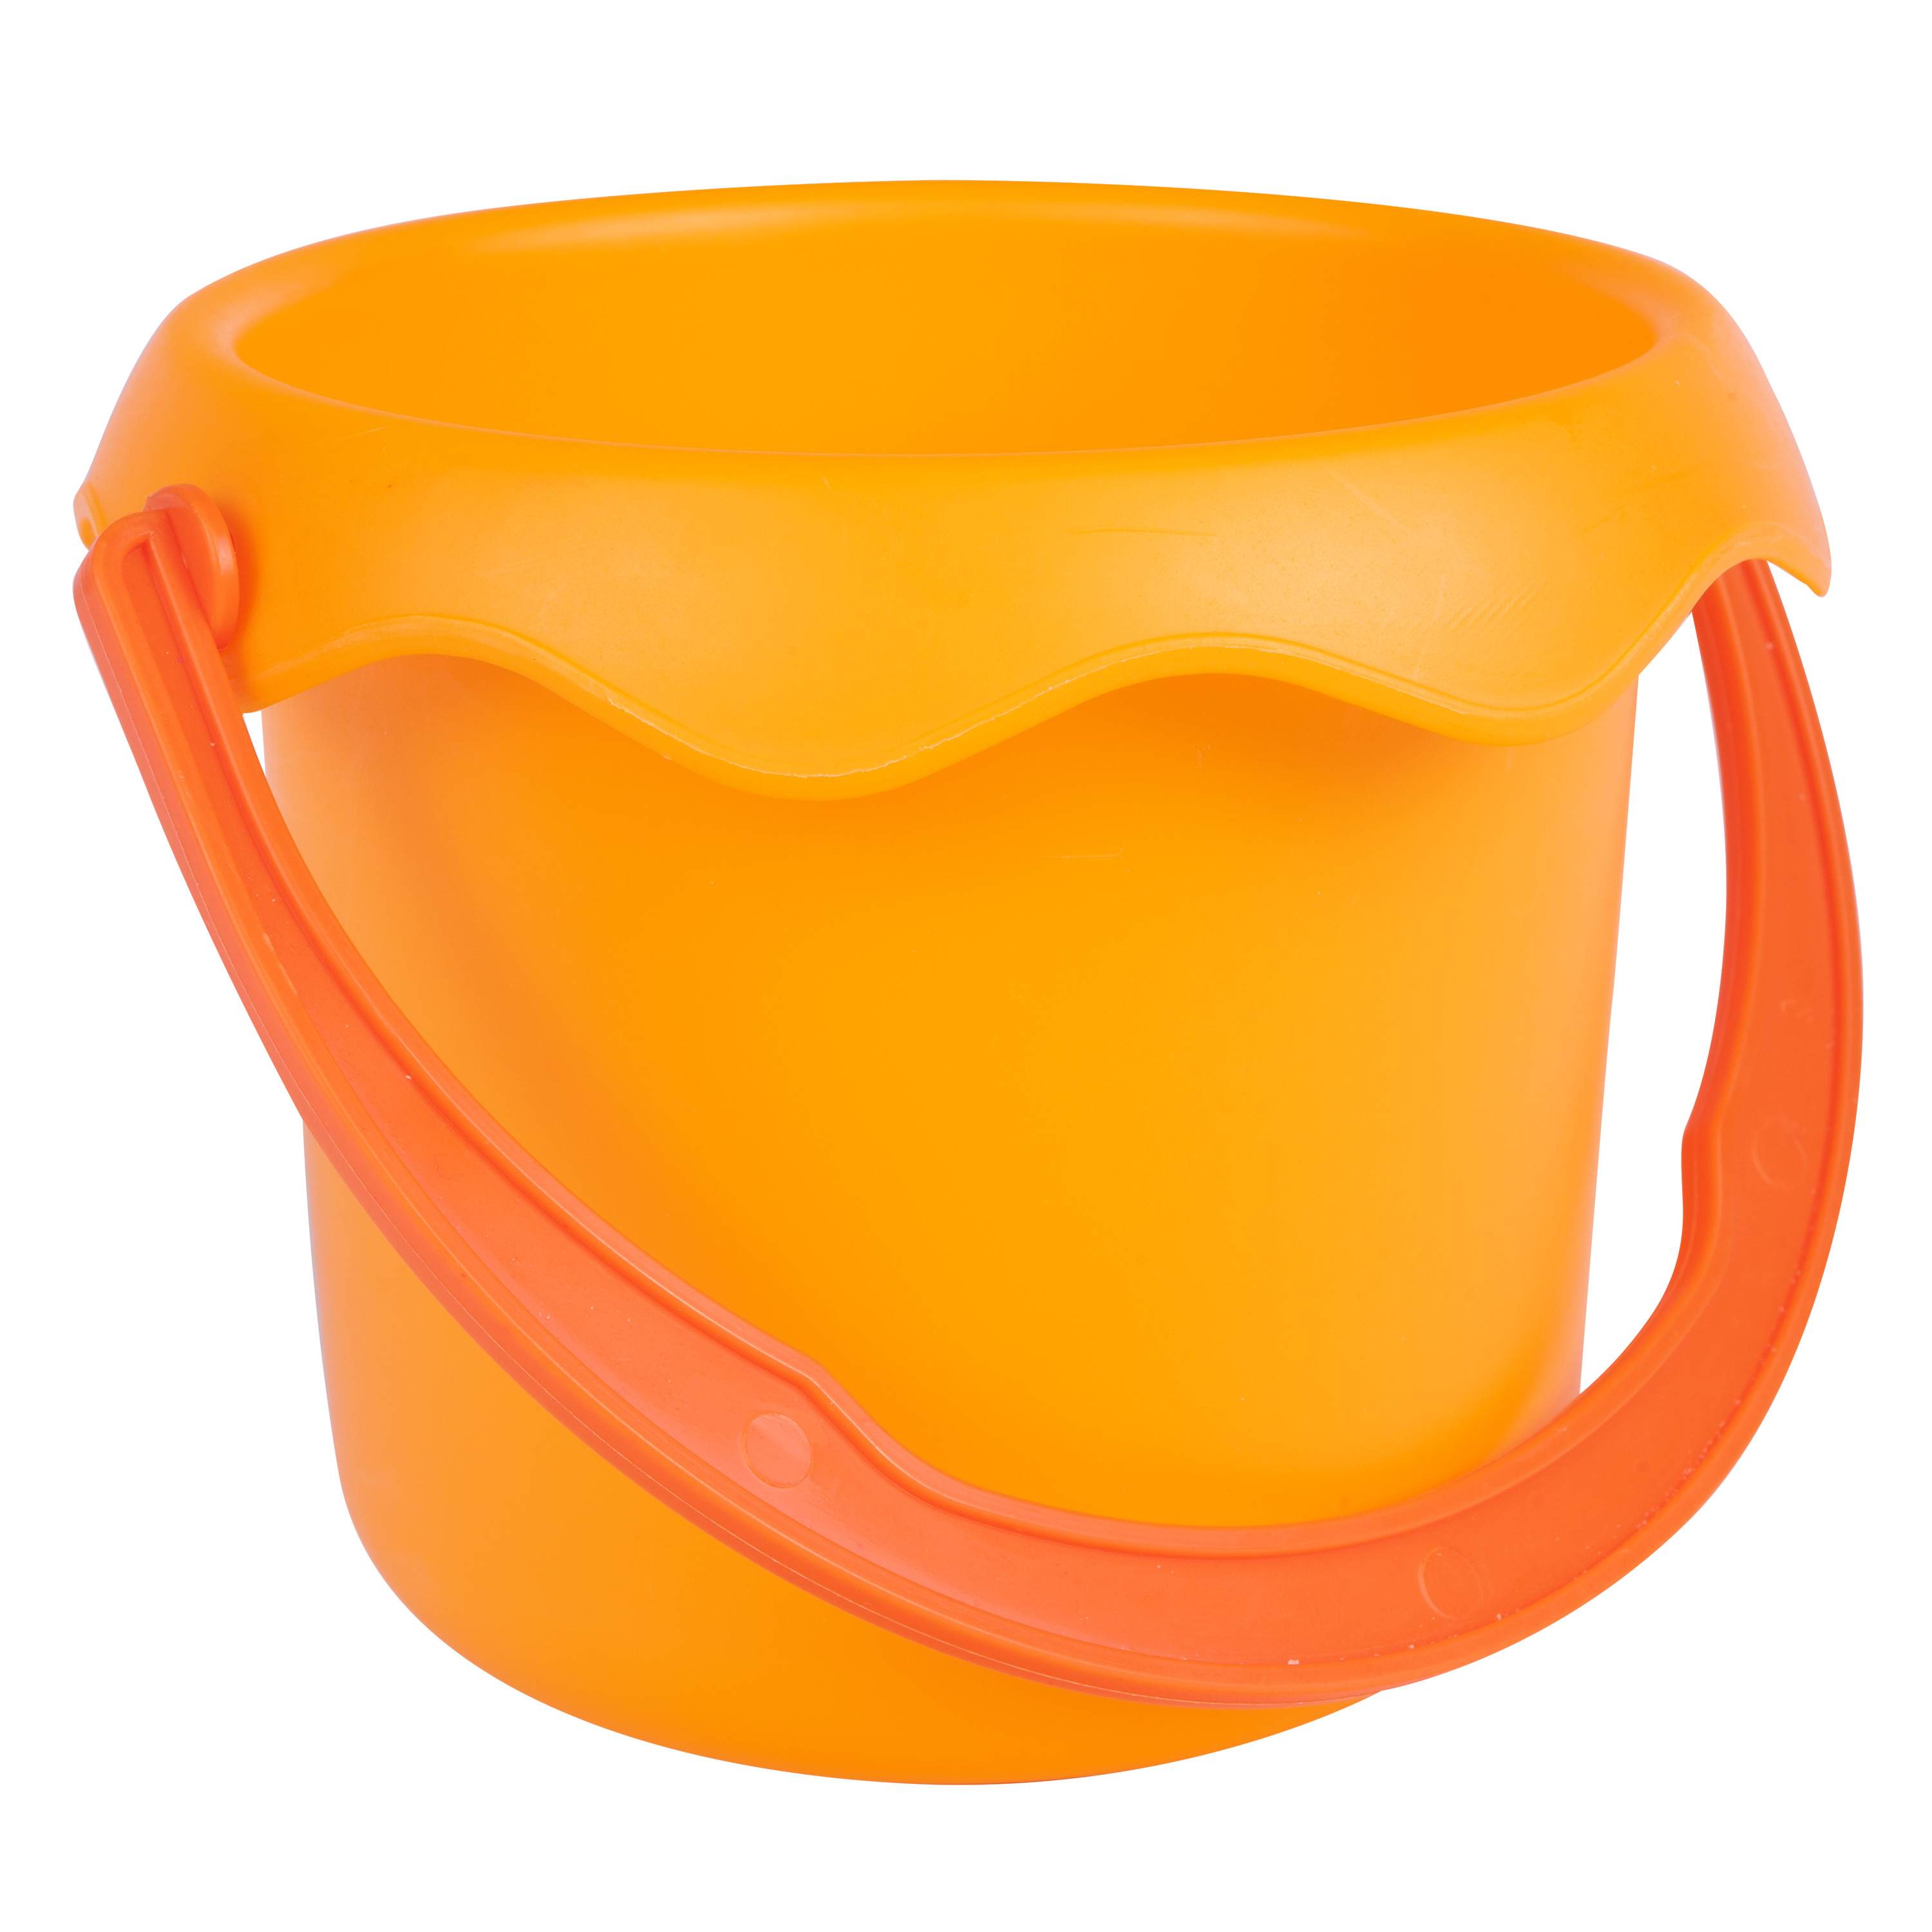 Eimer 'Soft', Ø 12 cm, orange